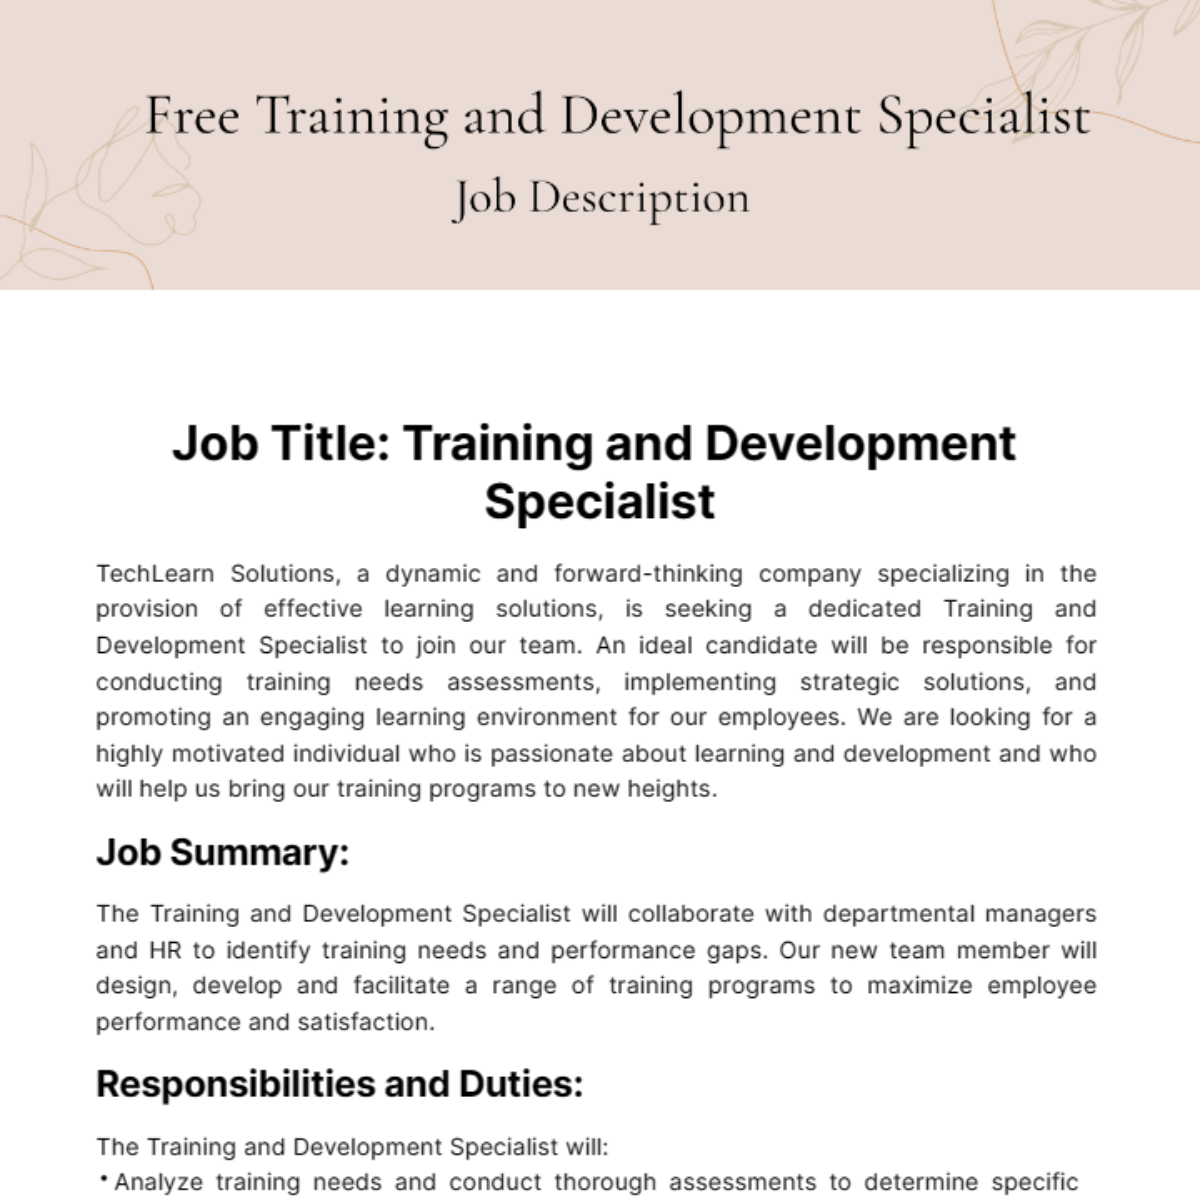 Free Training and Development Specialist Job Description Template